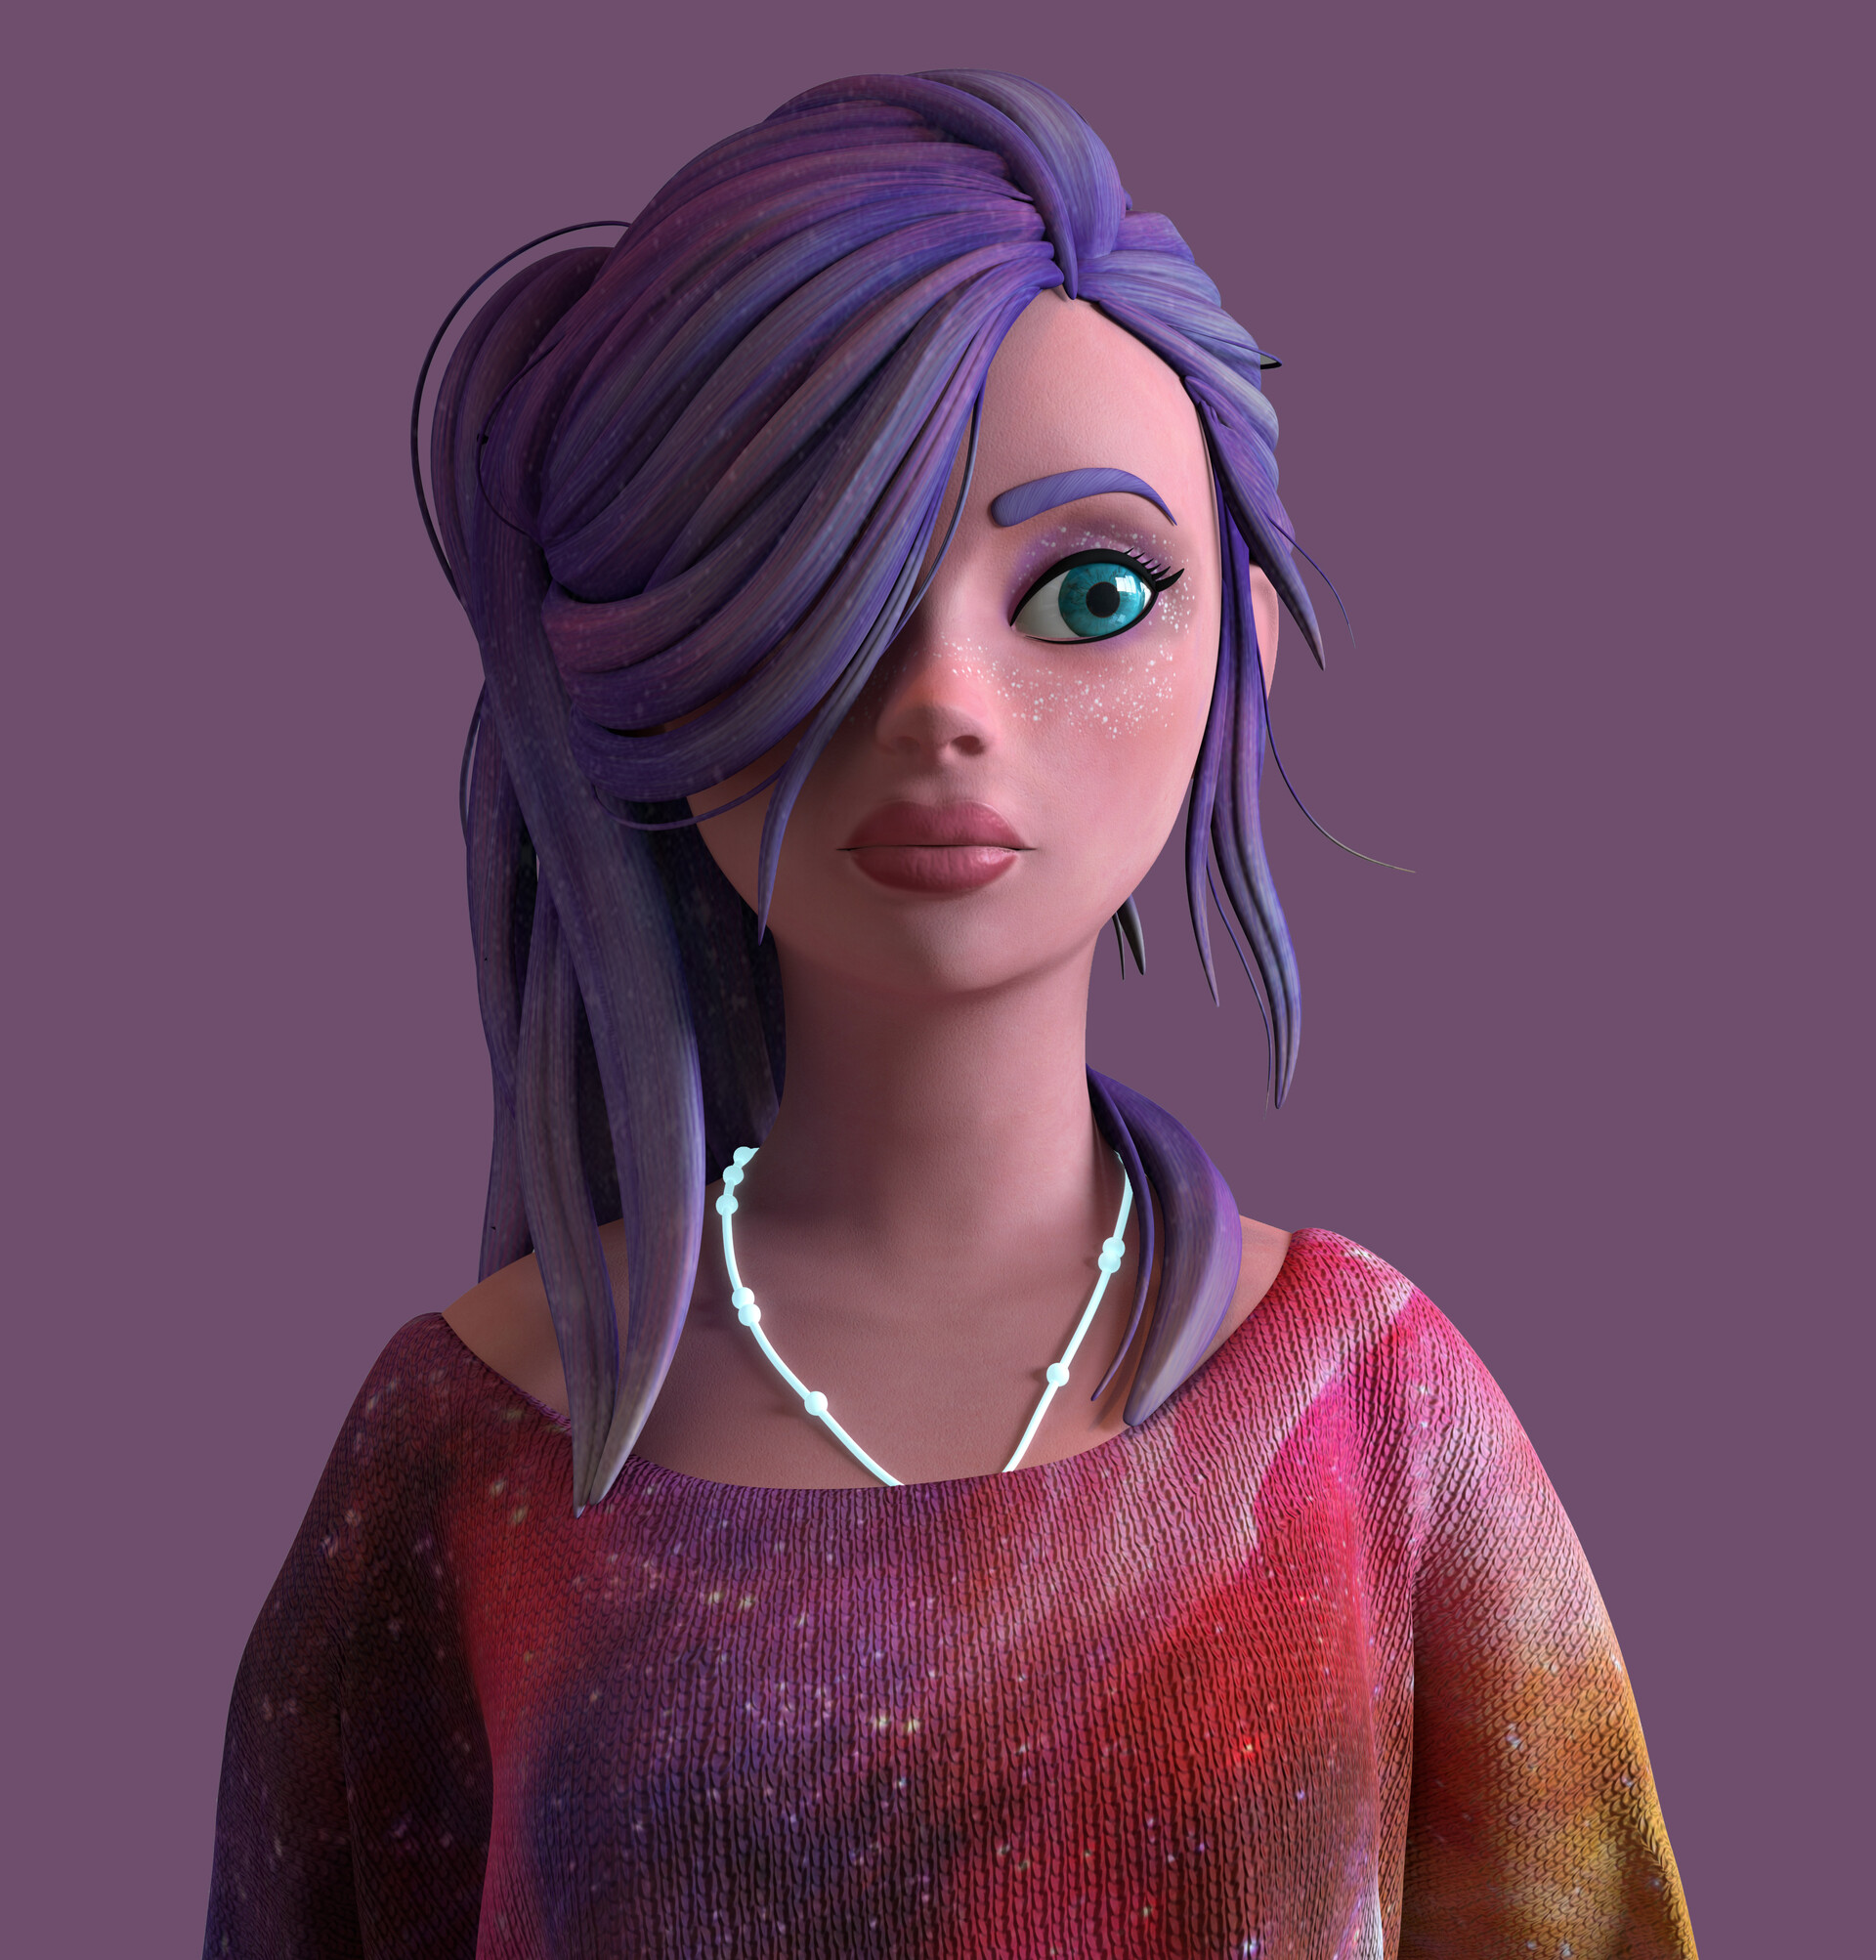 ArtStation - Galaxy girl 2.0